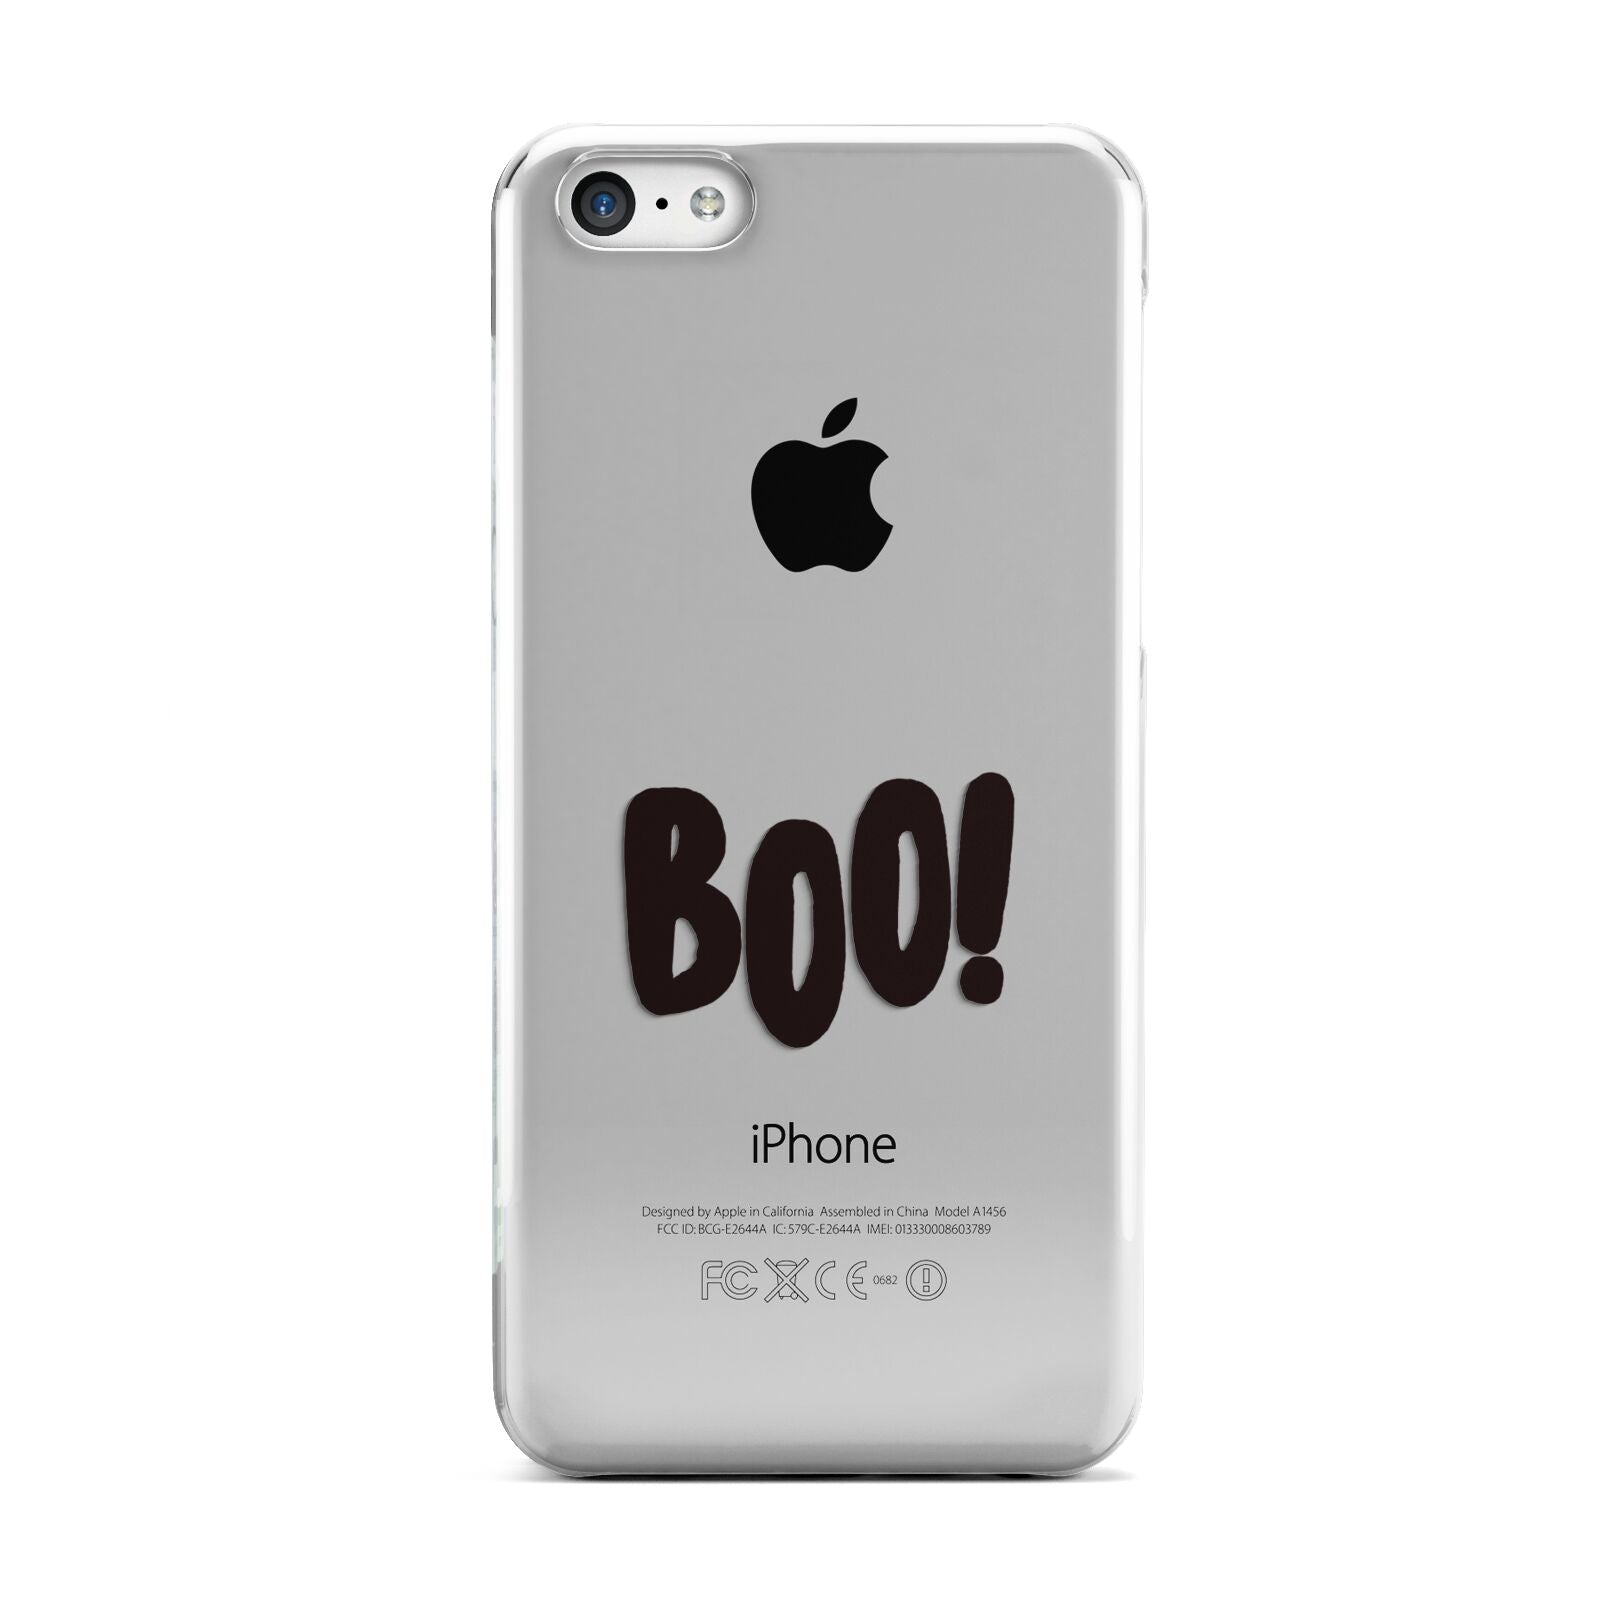 Boo Black Apple iPhone 5c Case